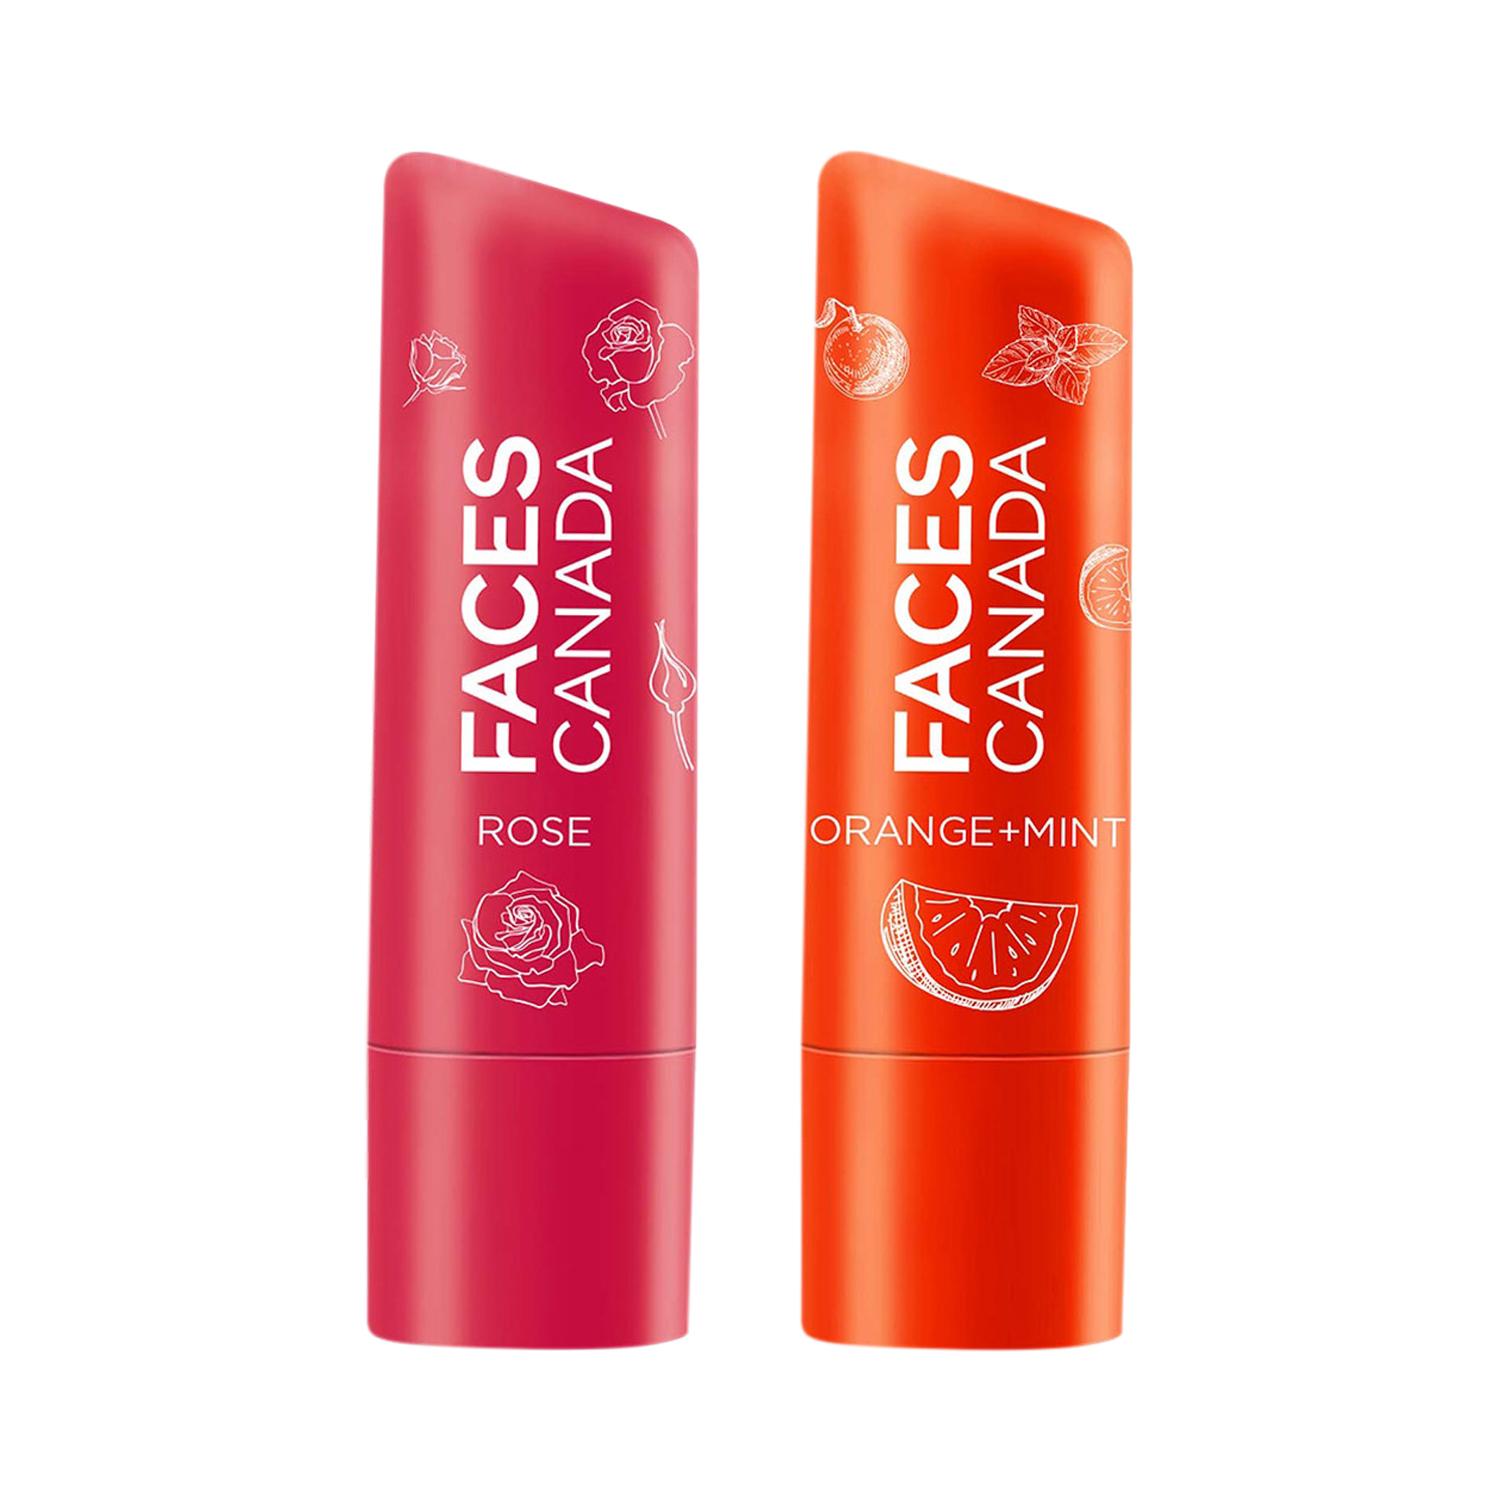 Faces Canada | Faces Canada Lip Balm Combo - Orange Mint + Rose Petal (Pack of 2)